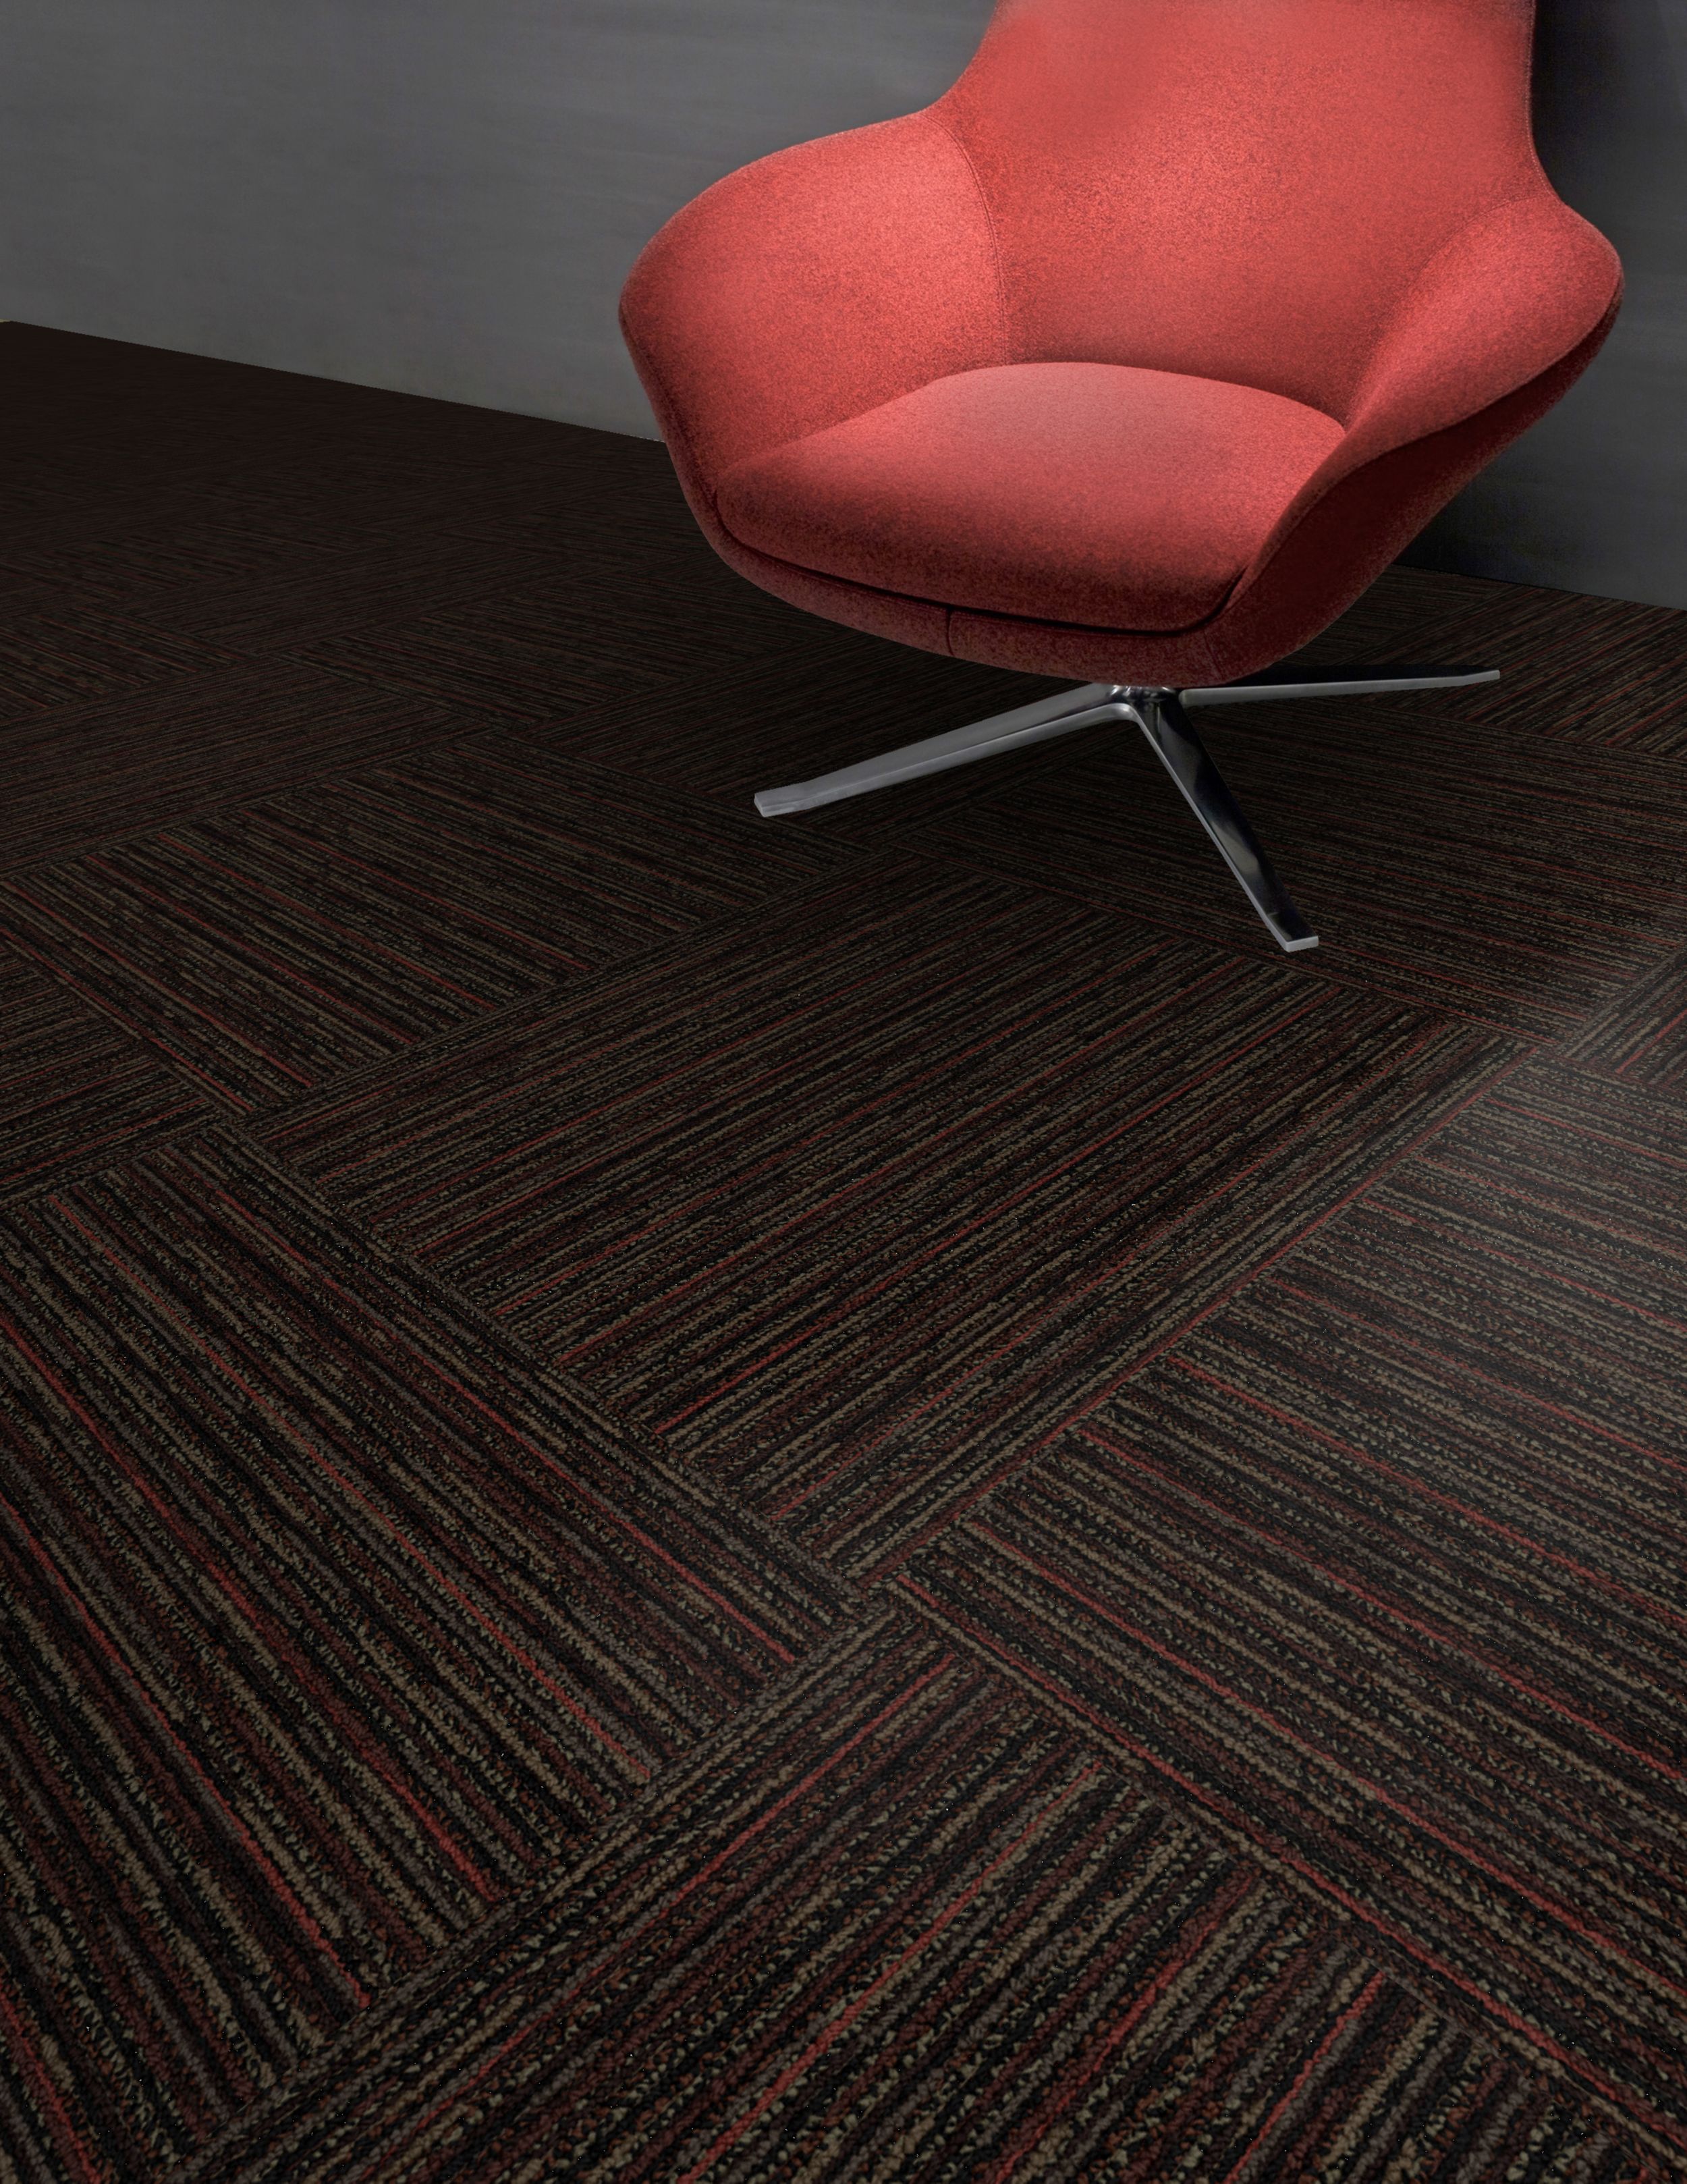 Interface Farmland Loop carpet tile wiith coral colored chair numéro d’image 8